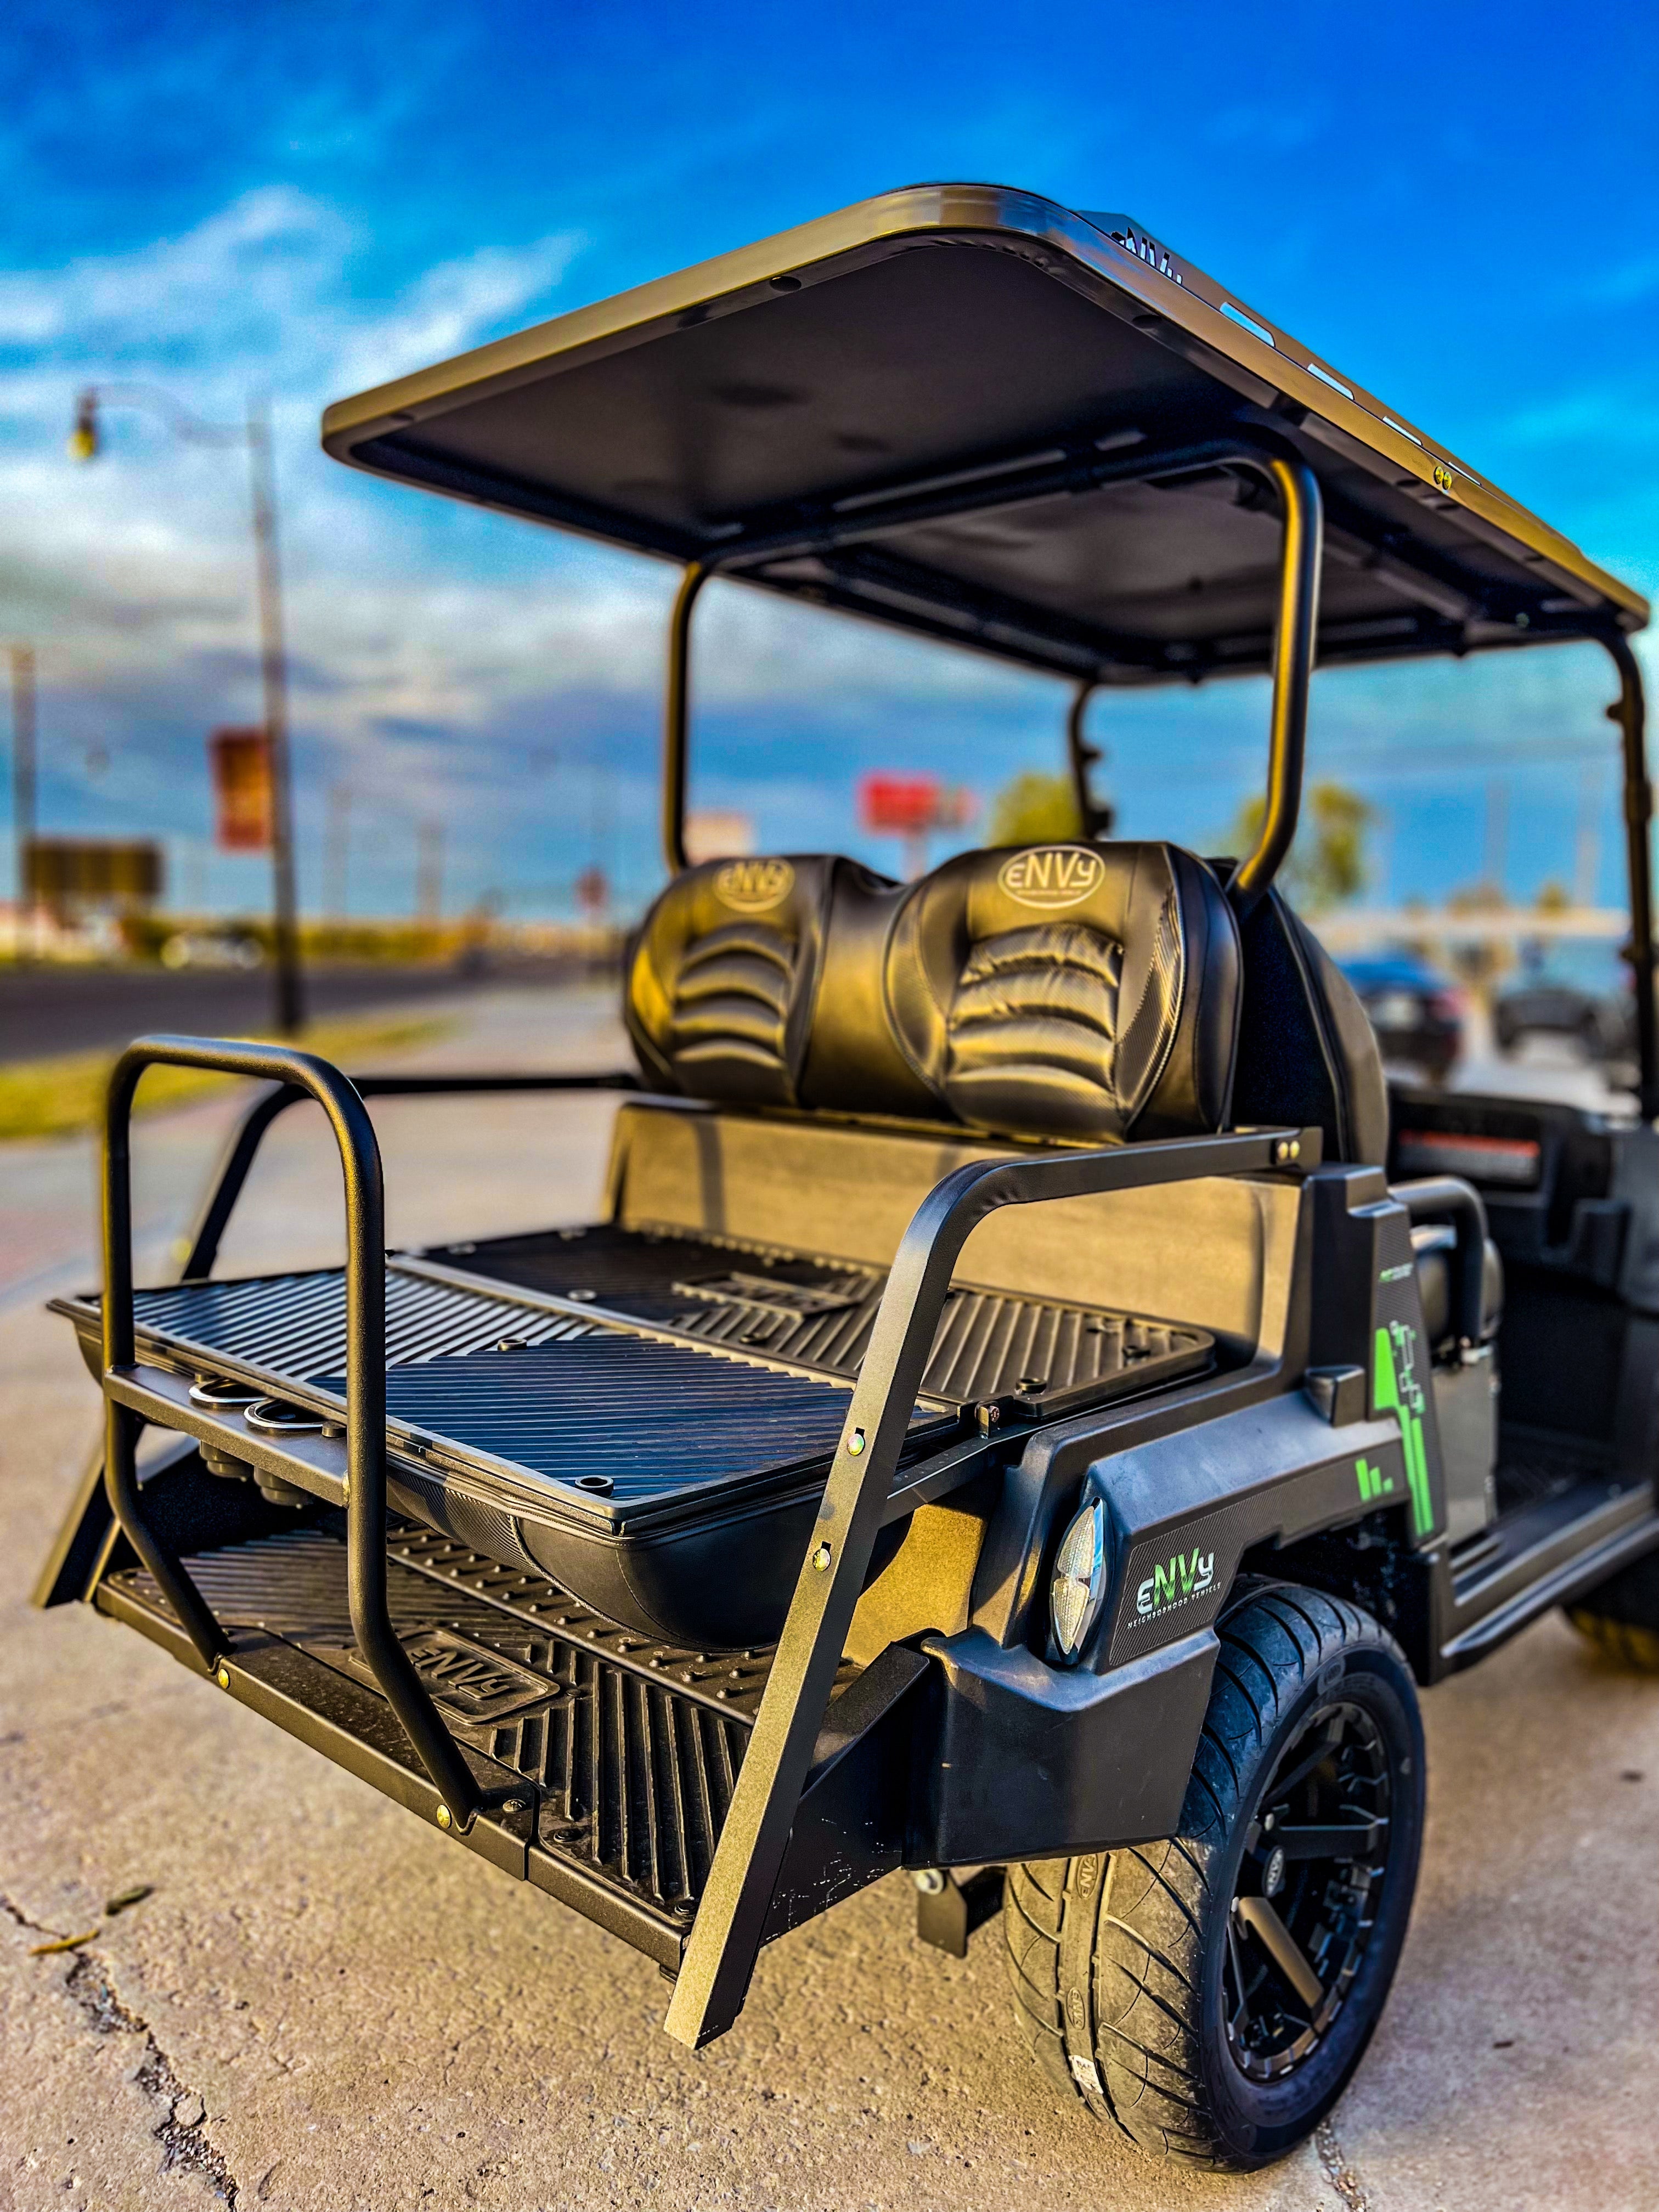 eNVy Neighborhood Vehicle 2023 | Best Electric UTV Golf Cart